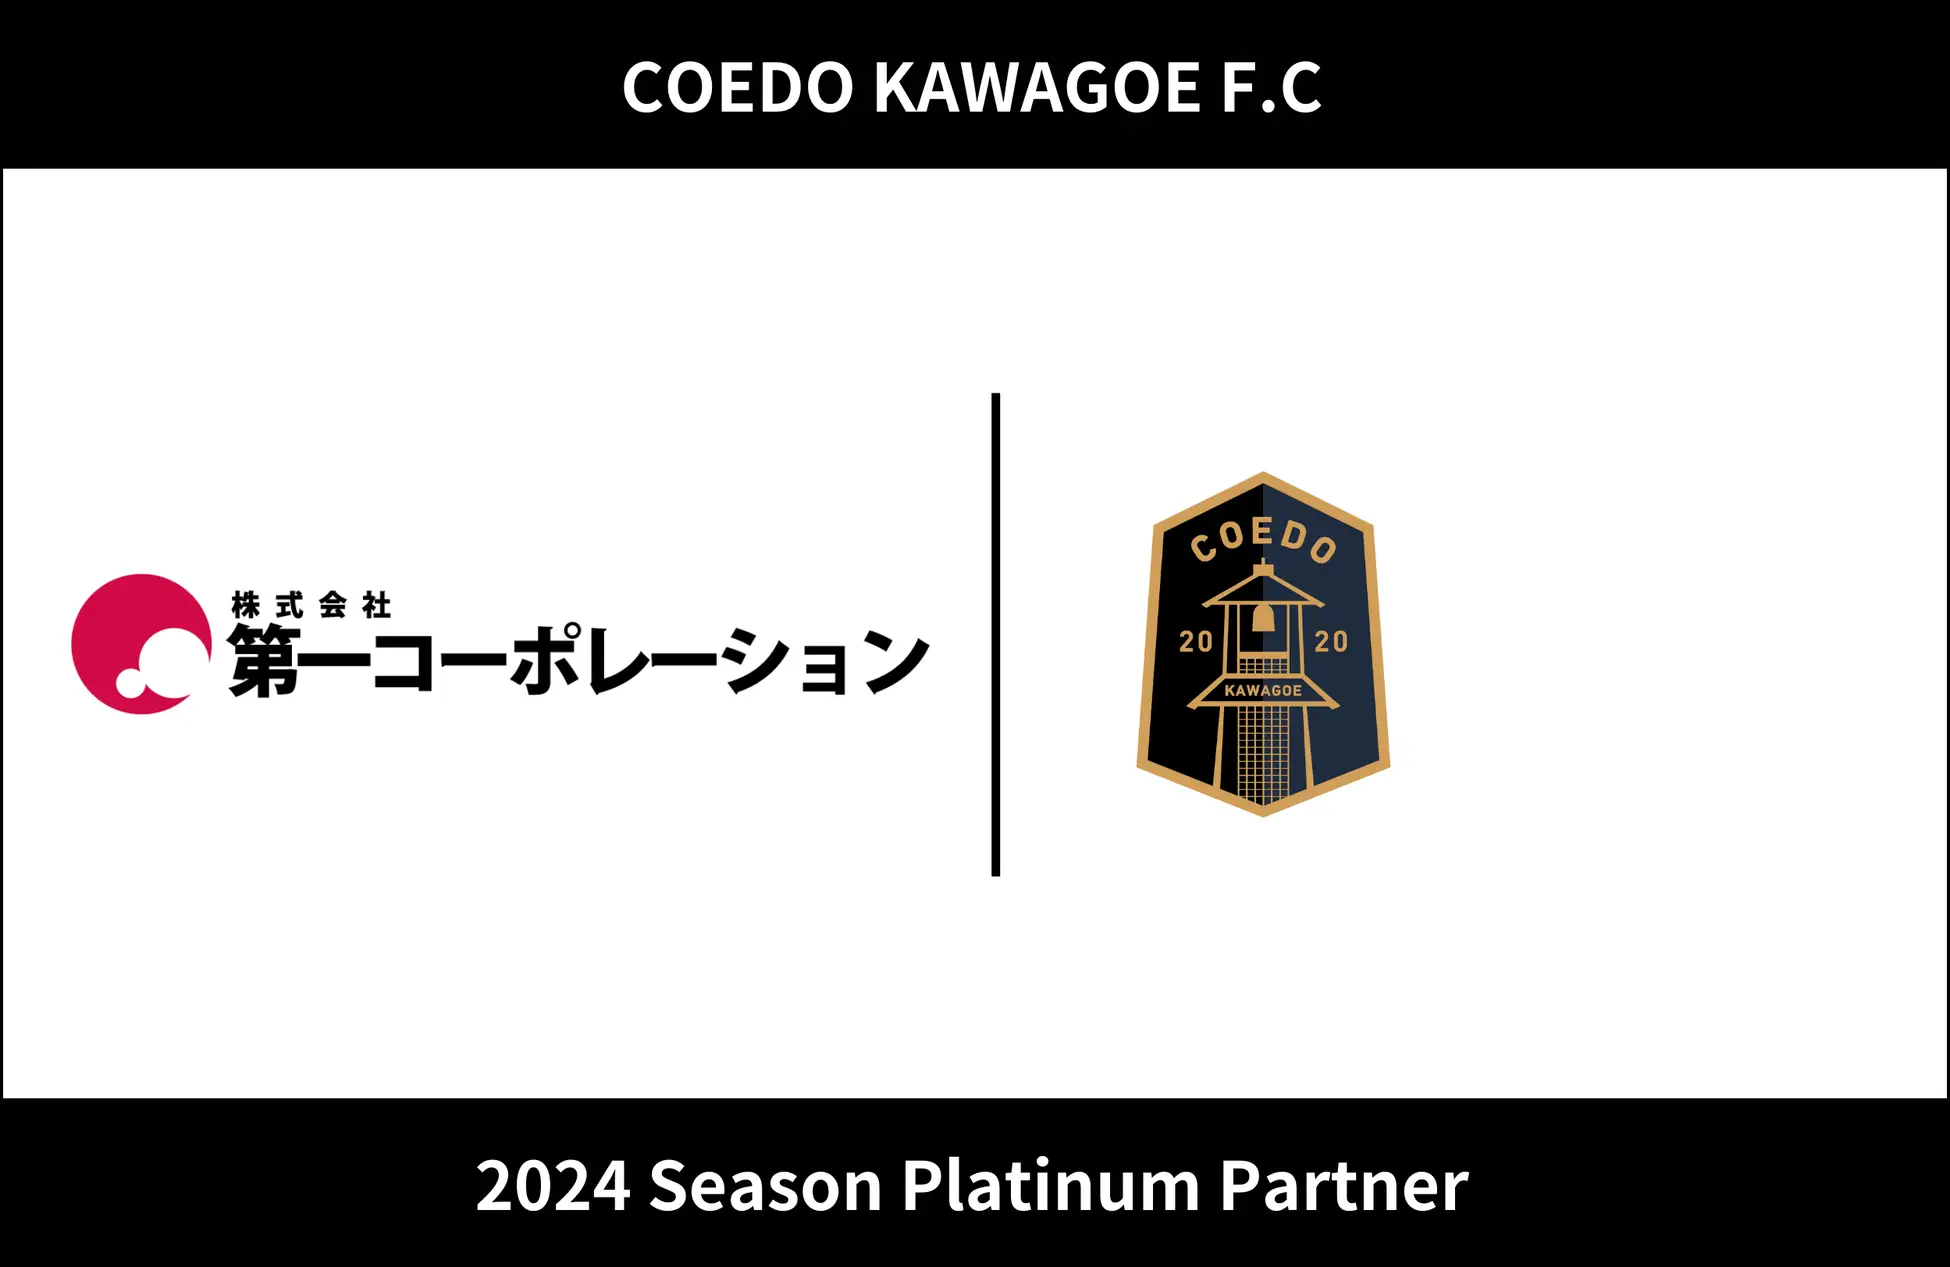 COEDO KAWAGOE F.Cとの2024シーズンパートナー契約の締結について